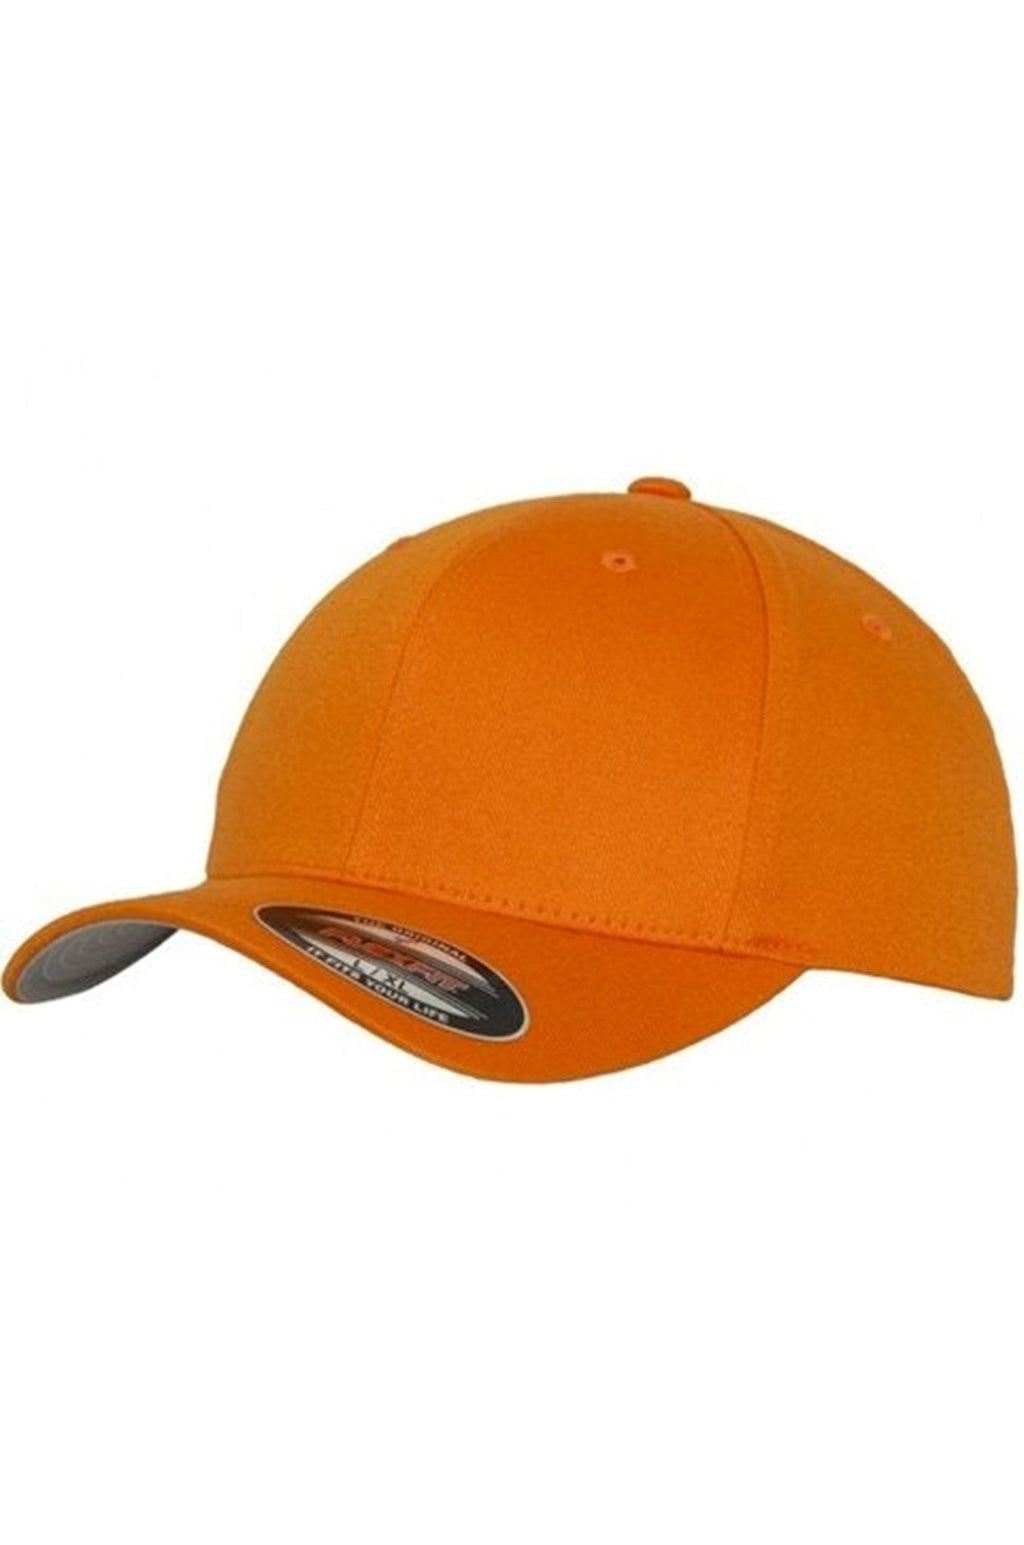 FlexFit原始棒球帽 - 橙色